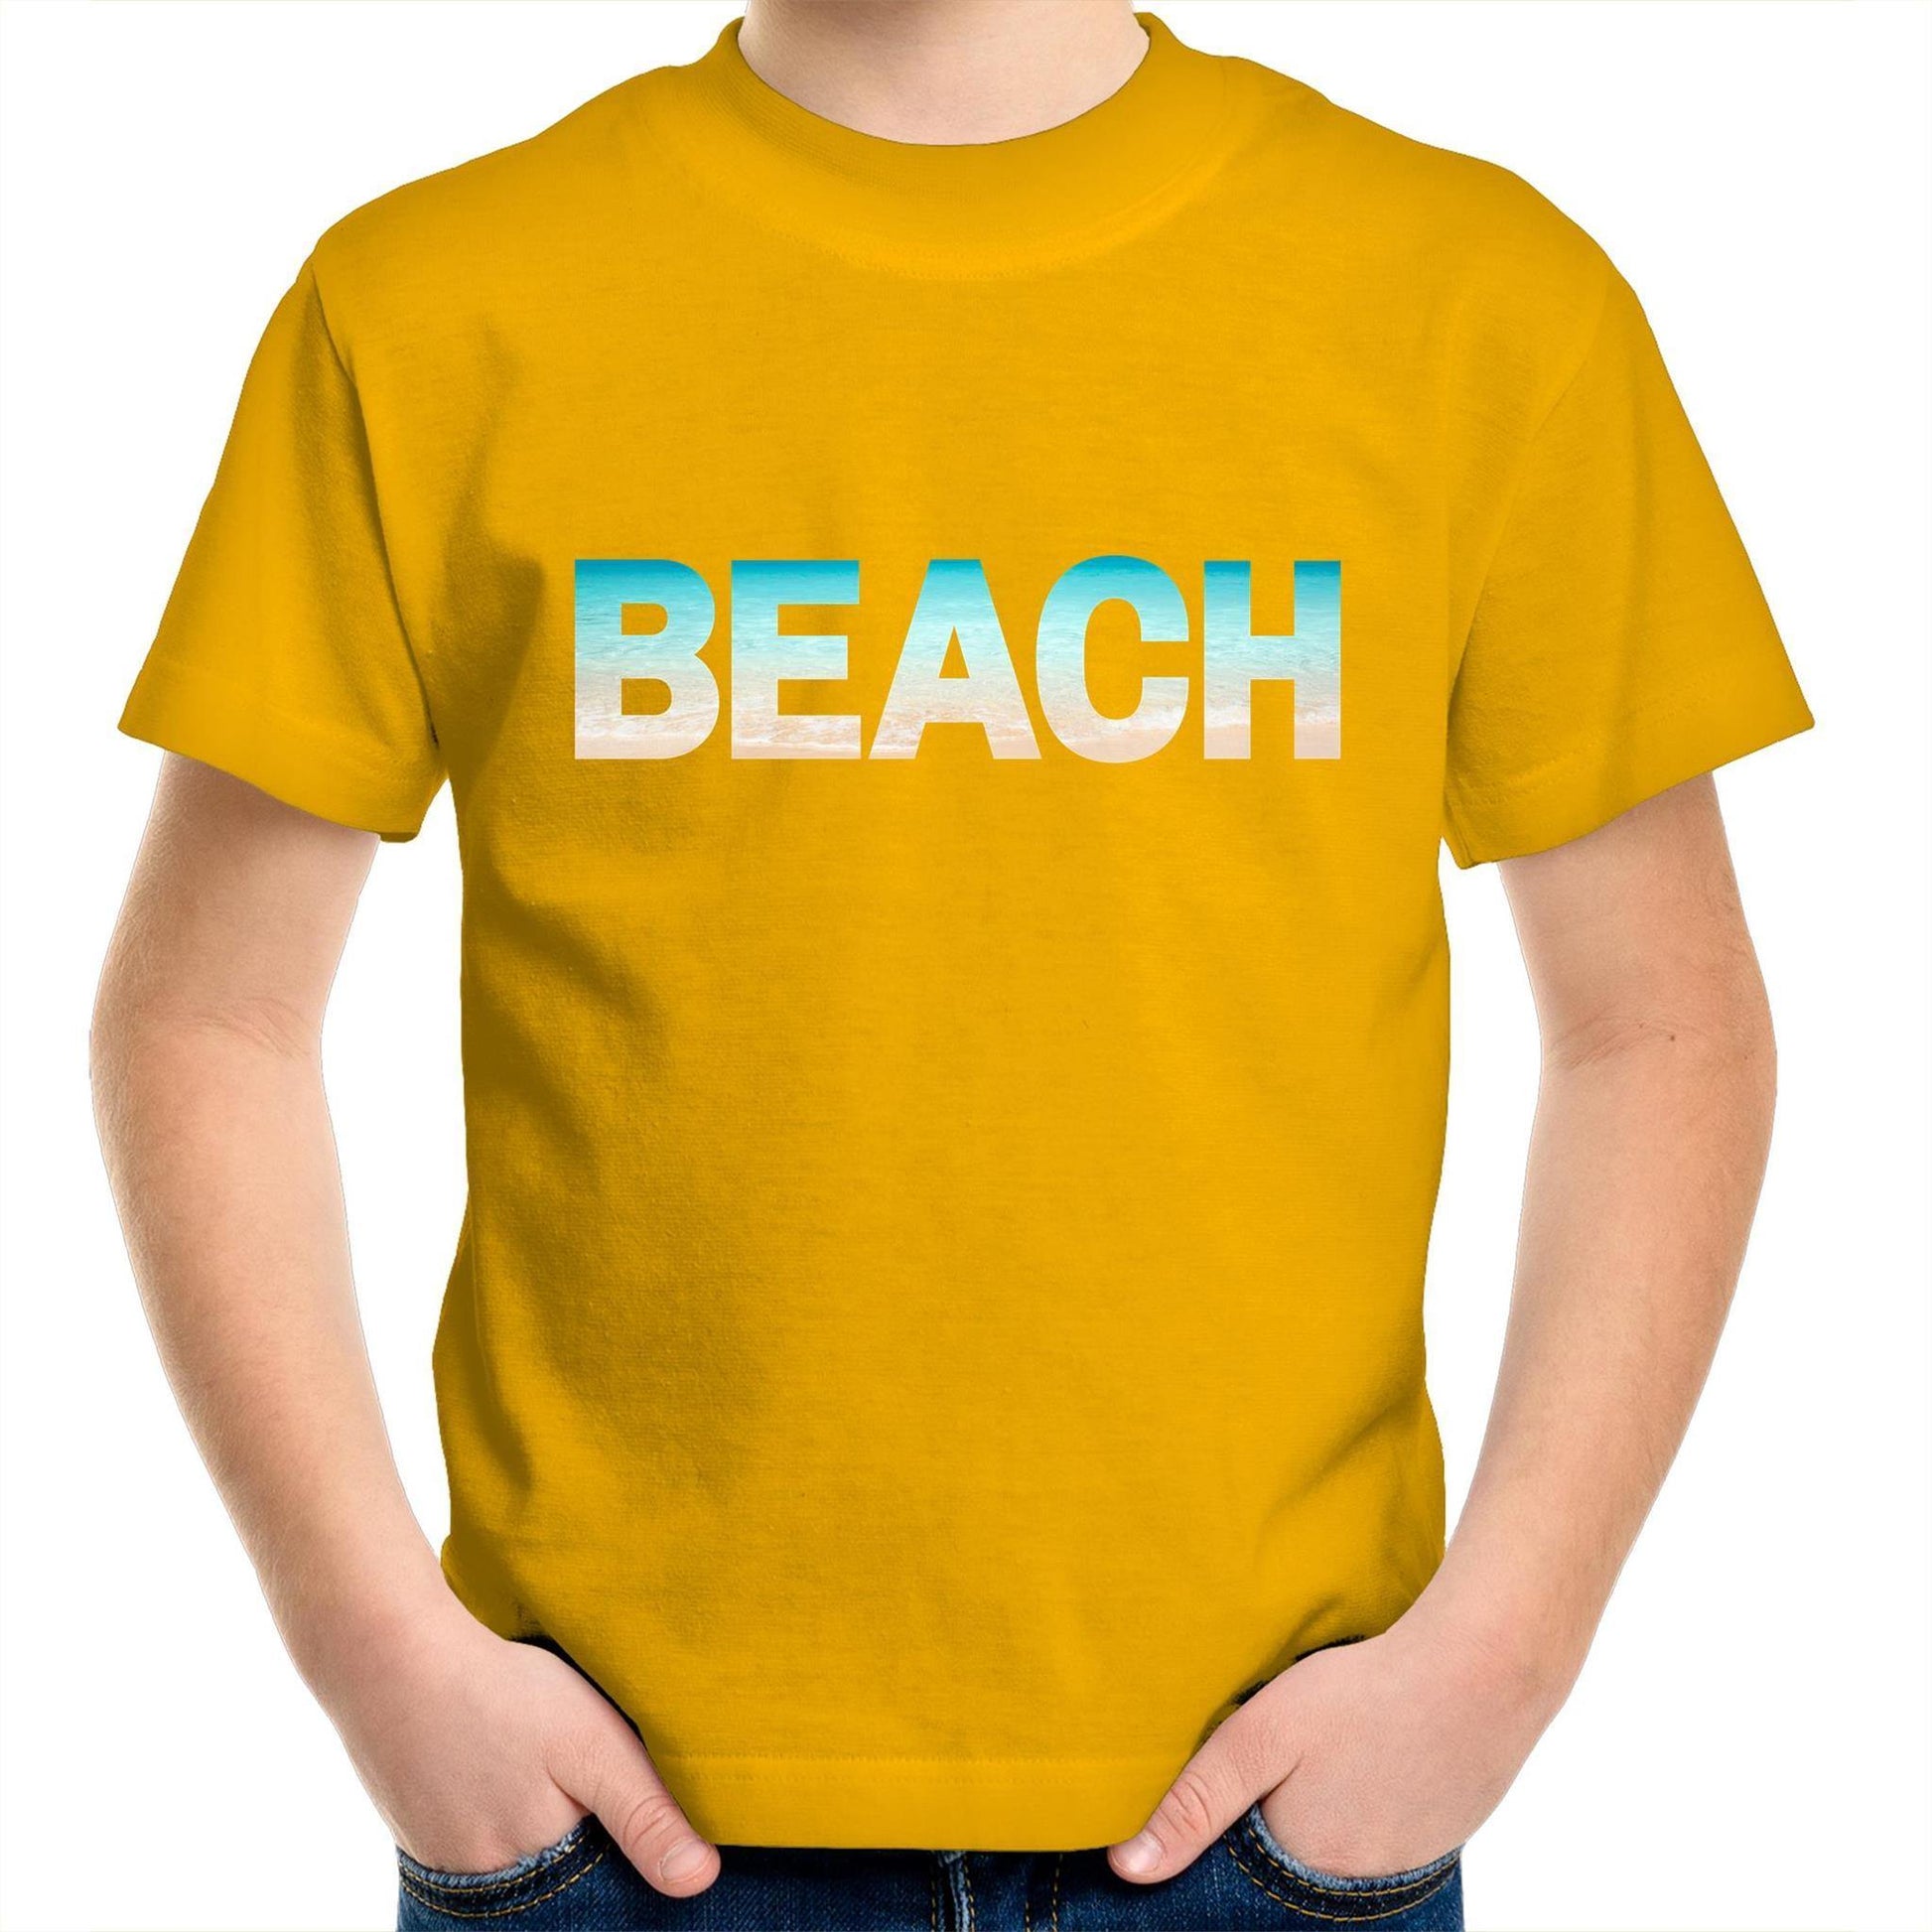 Beach - Kids Youth Crew T-Shirt Gold Kids Youth T-shirt Summer